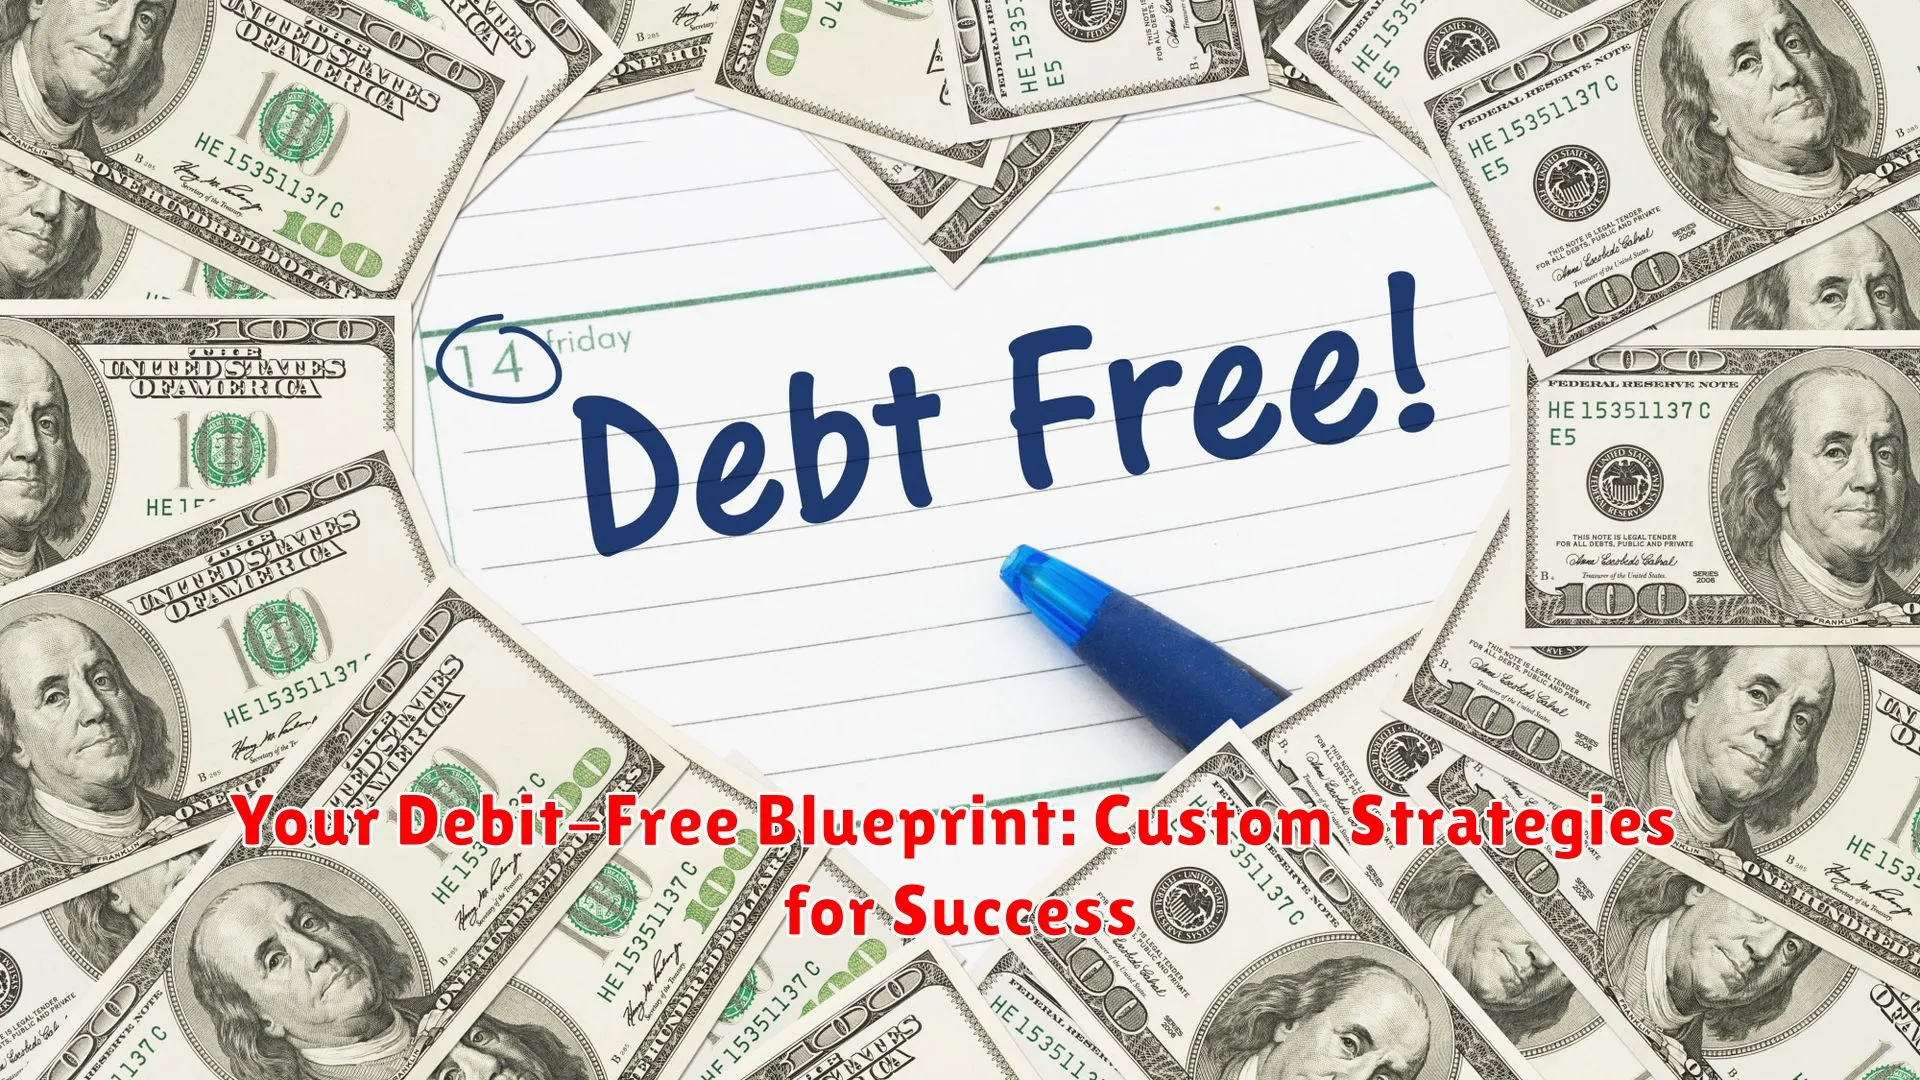 Your Debit-Free Blueprint: Custom Strategies for Success